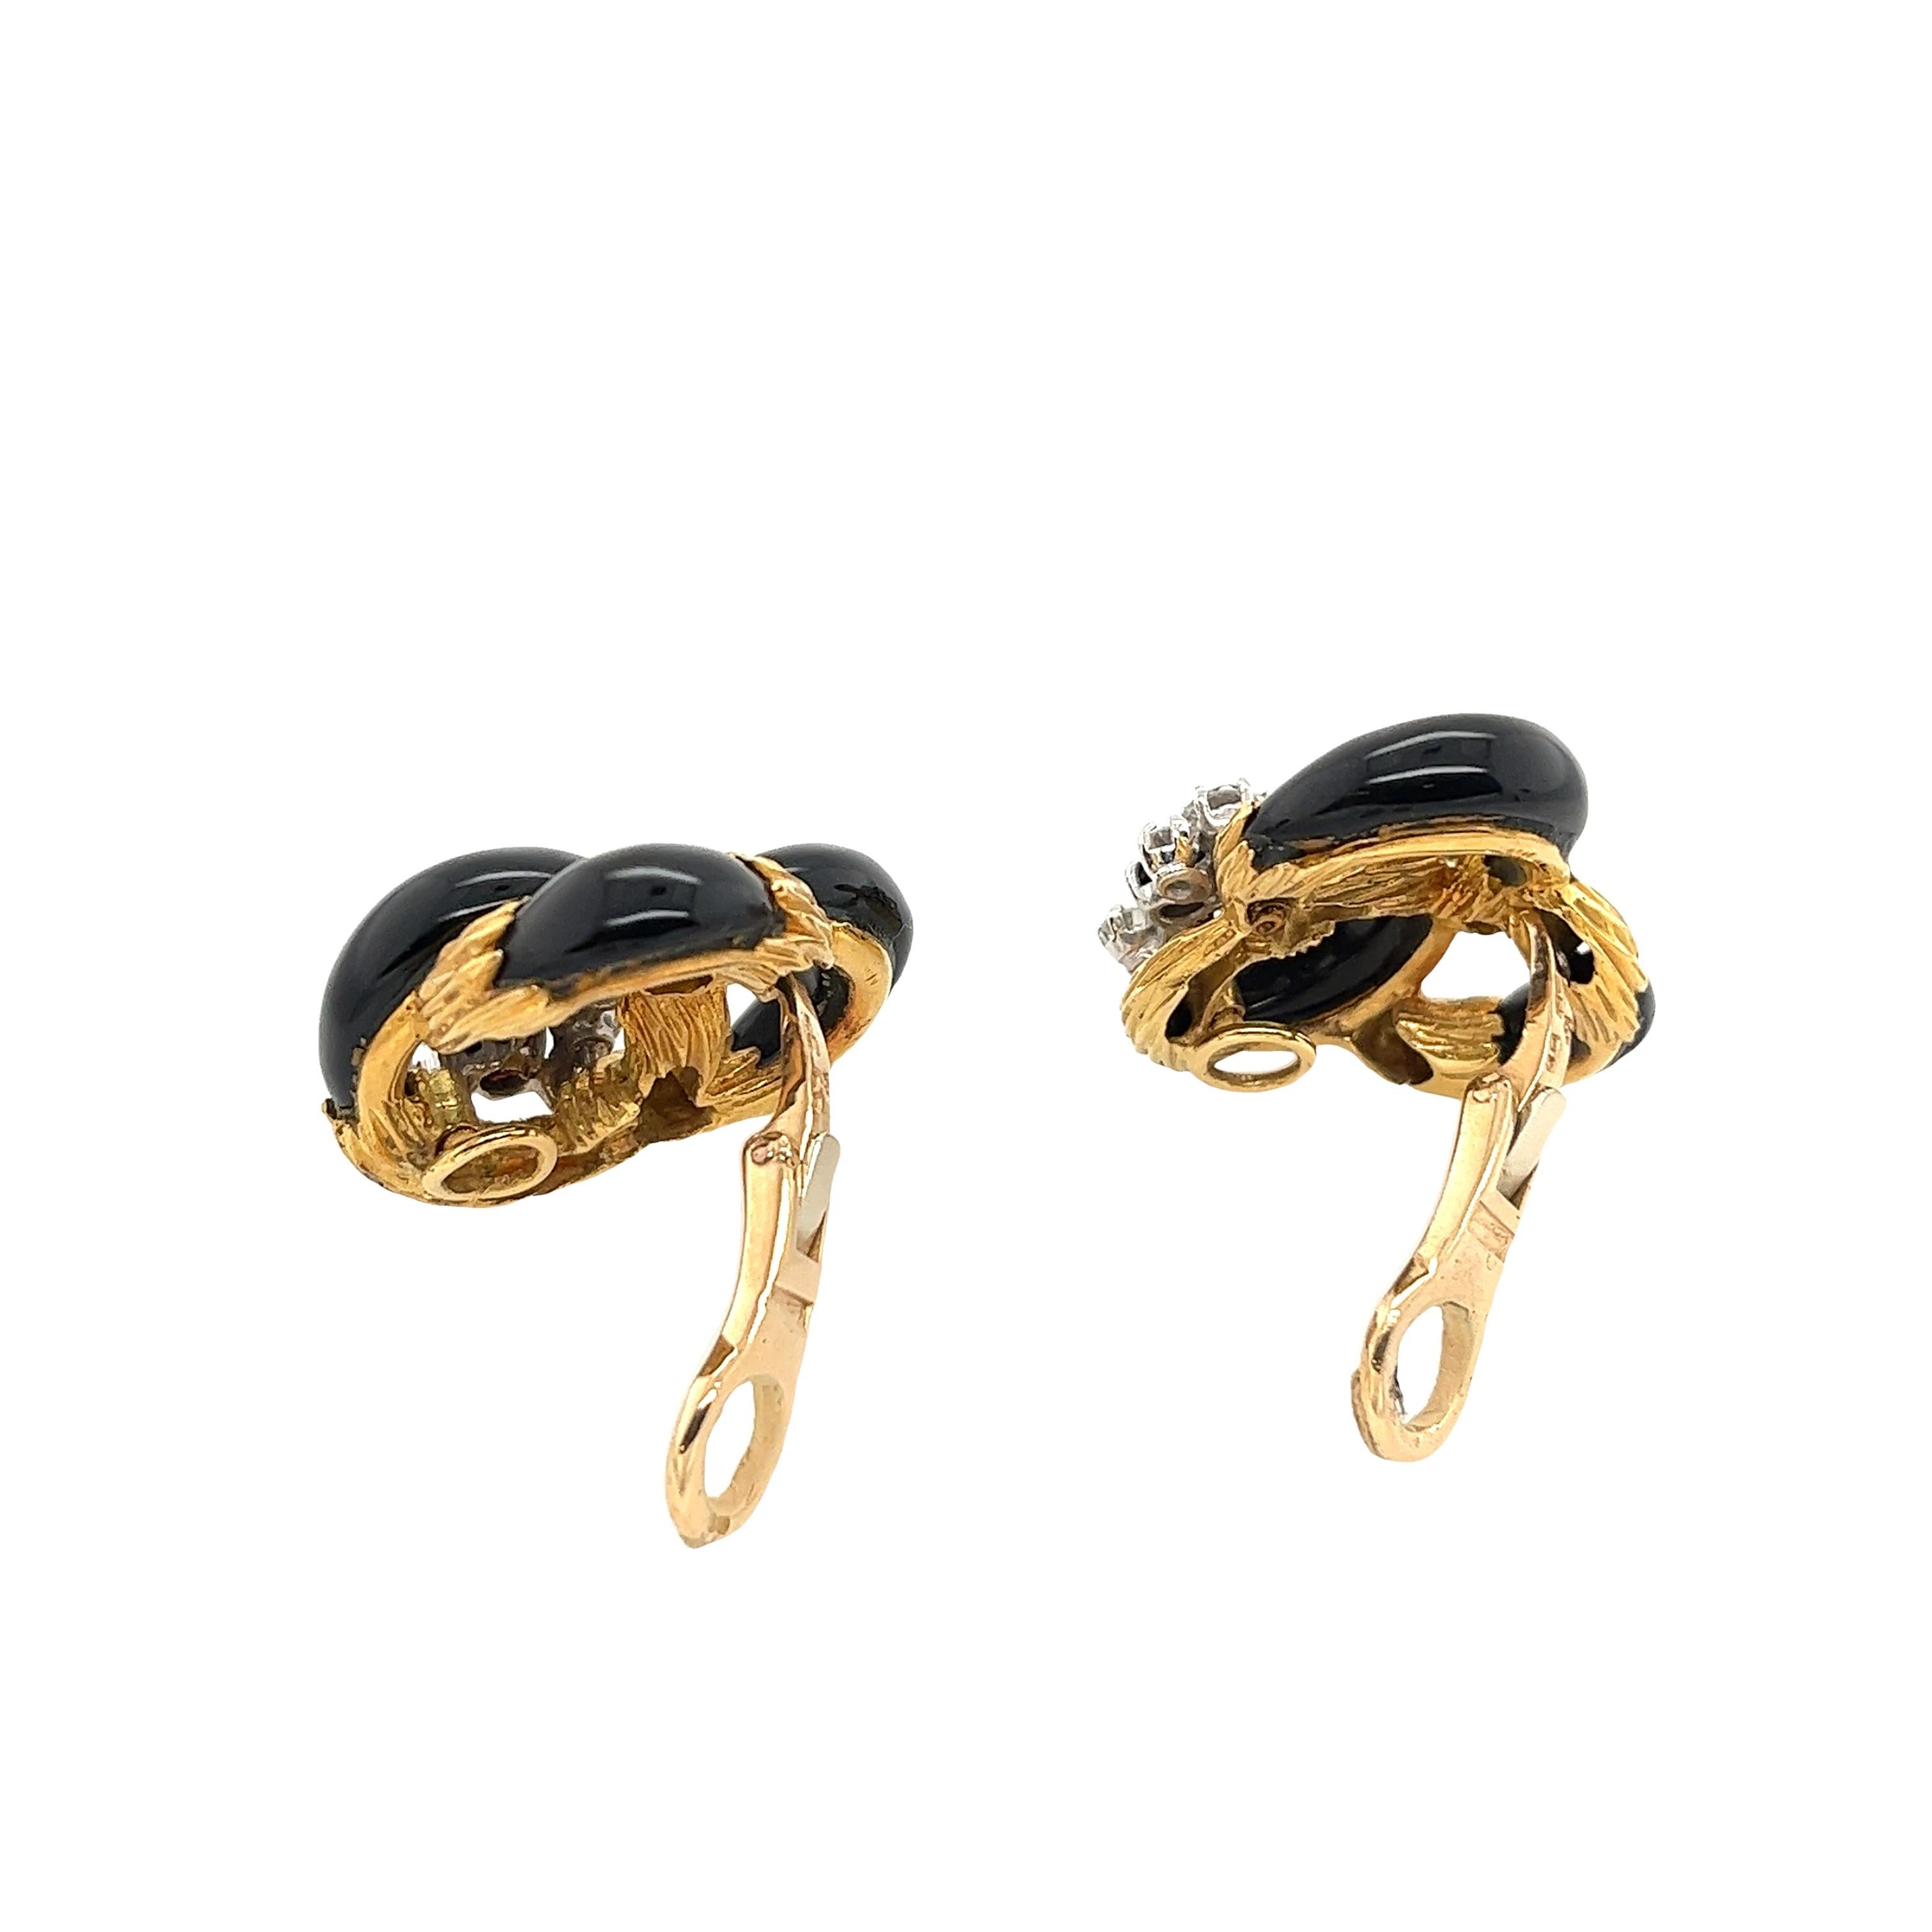 Kutchinsky Vintage Diamond Earrings Black Enamel Set In 18ct Yellow Gold 3